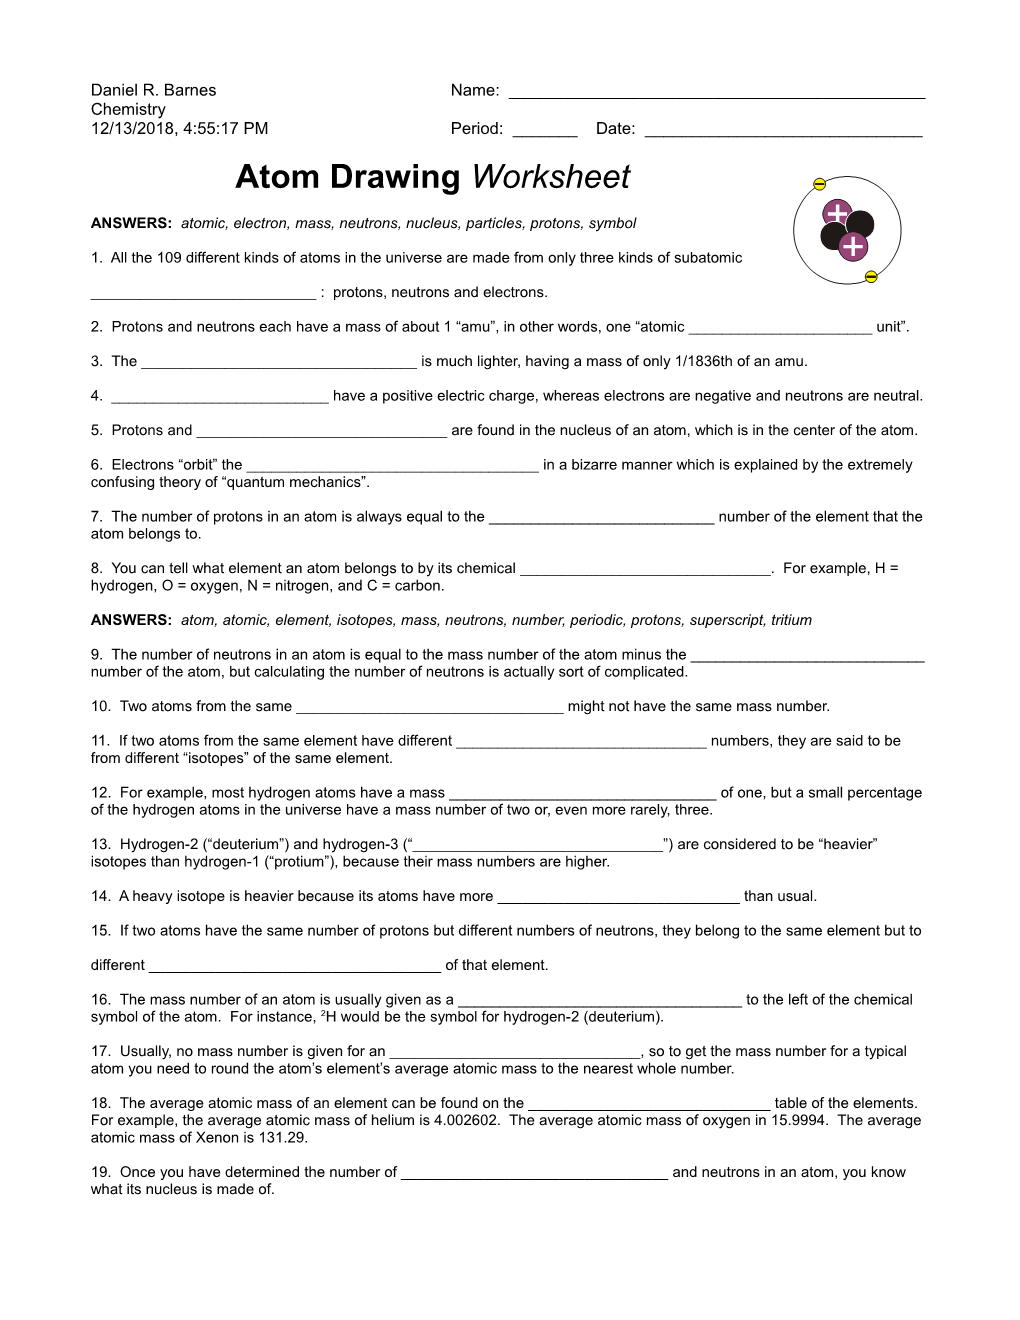 Atom Drawing Worksheet, Daniel R. Barnes, Chemistry, 9/9/05 10:08:25 AM